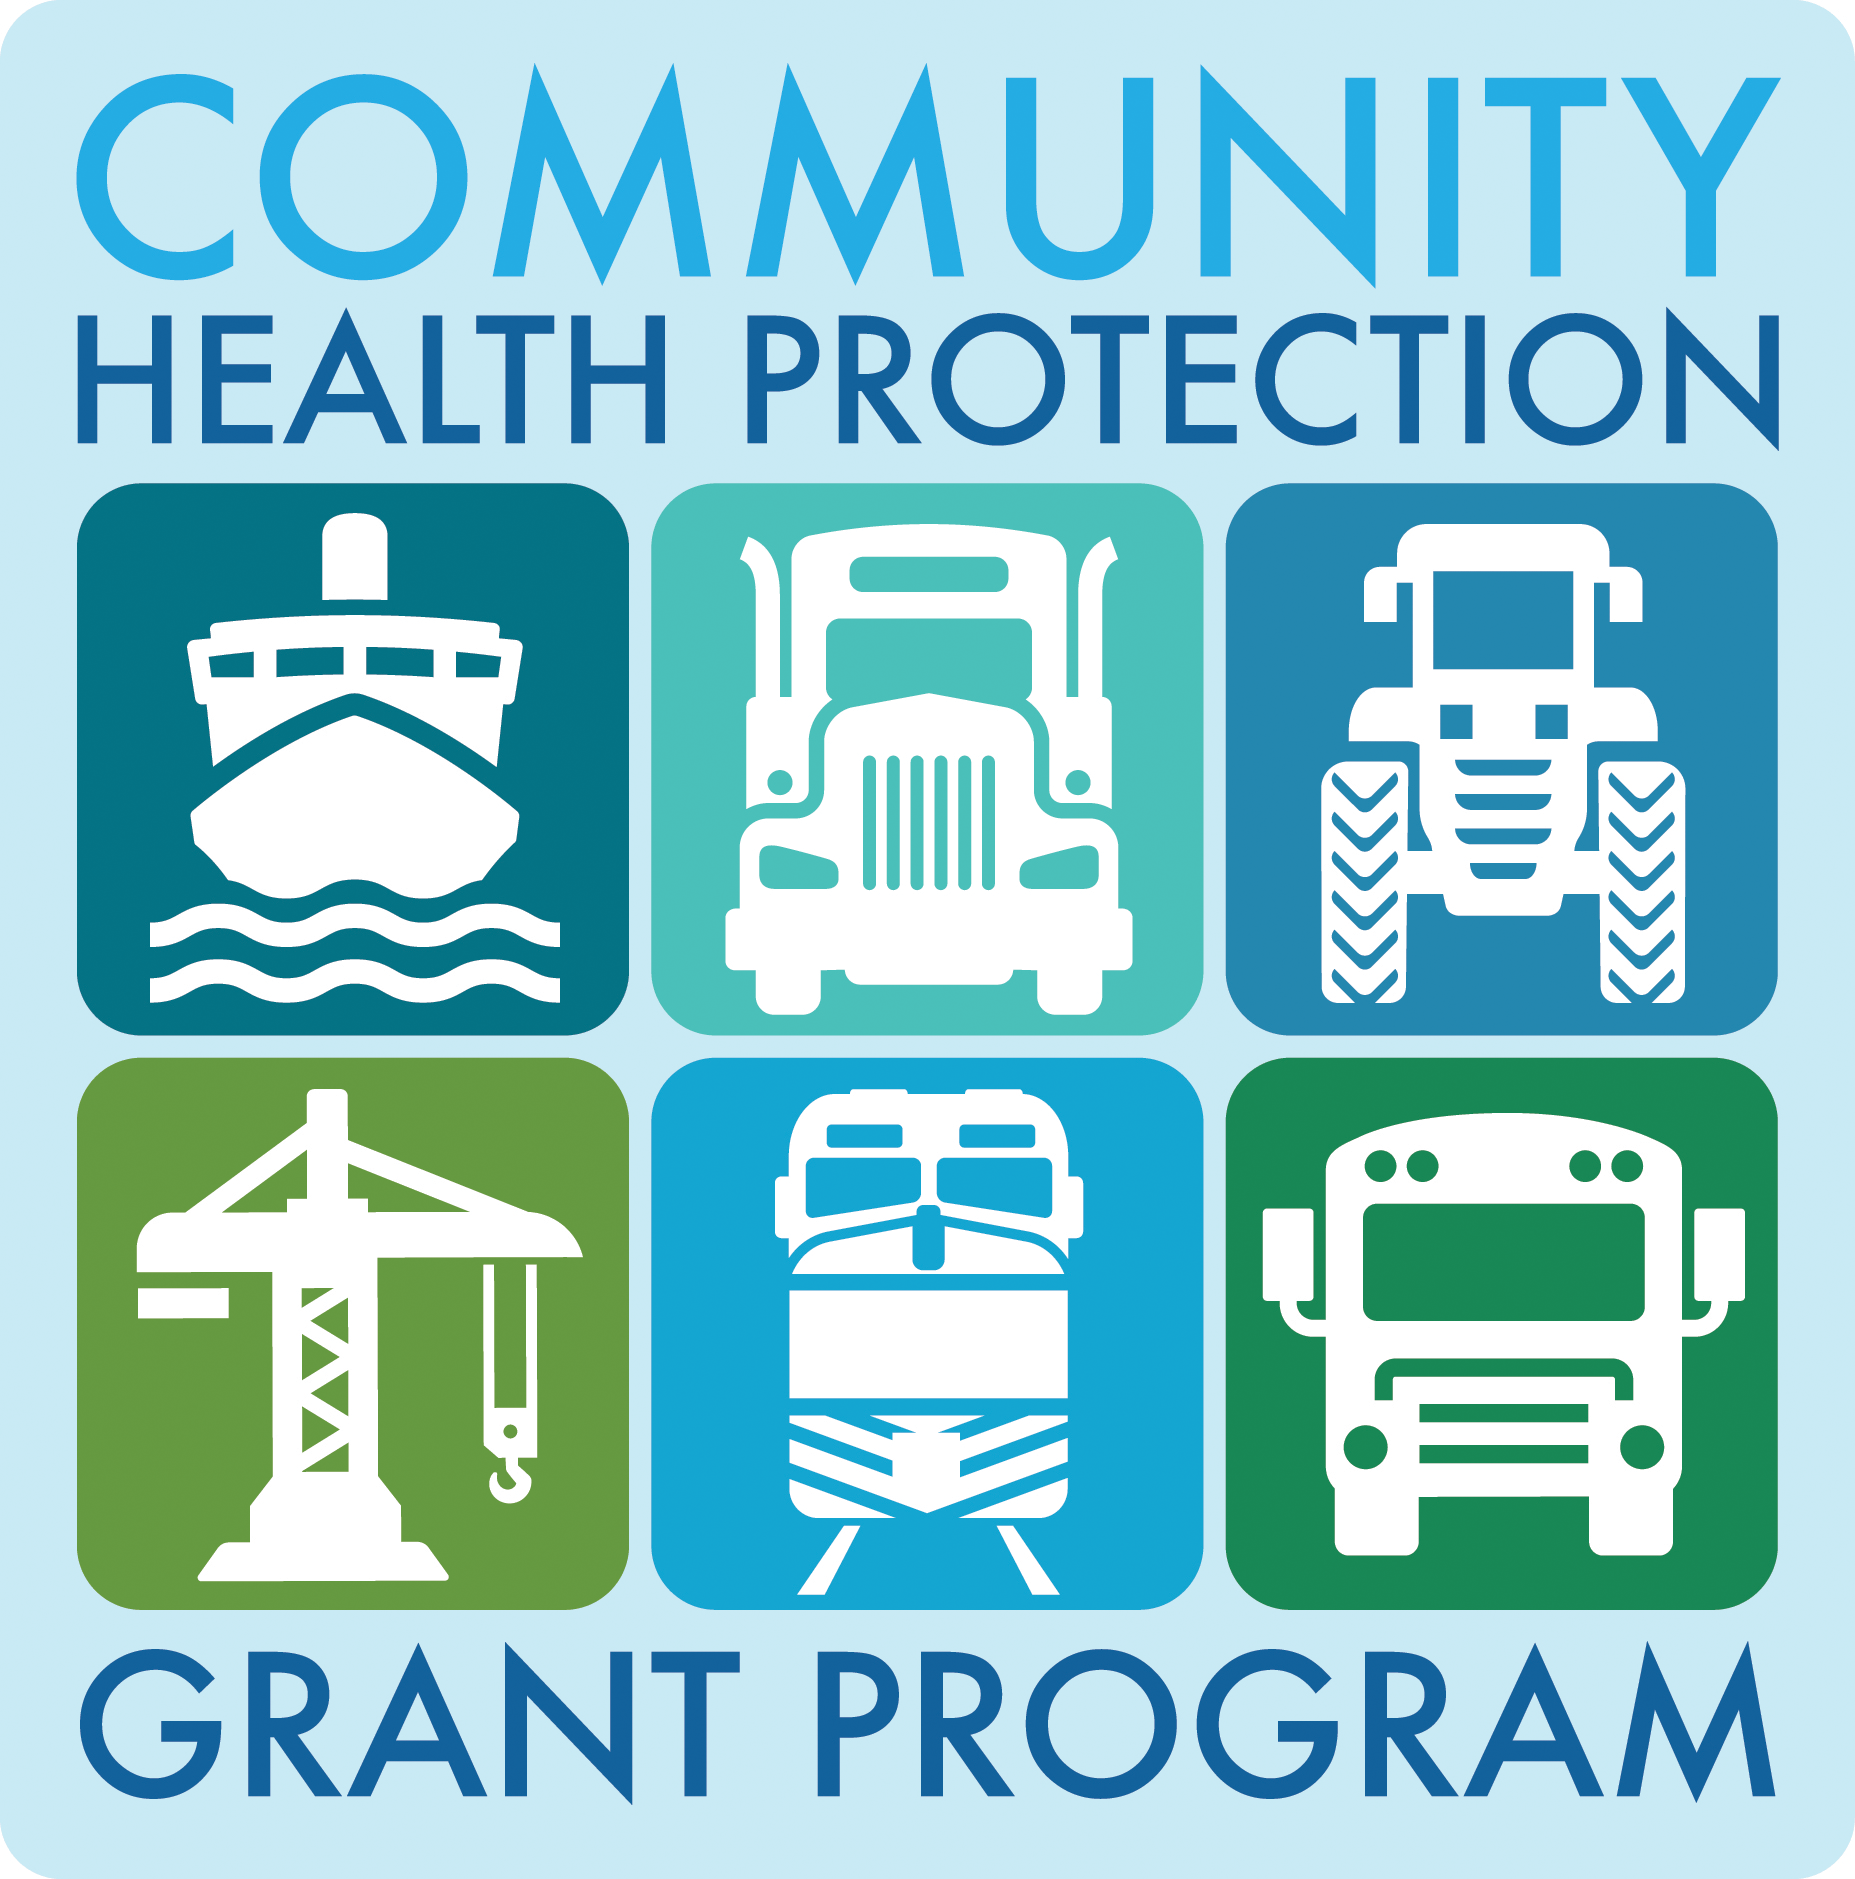 BAAQMD Logo - Community Health Protection Grant Program